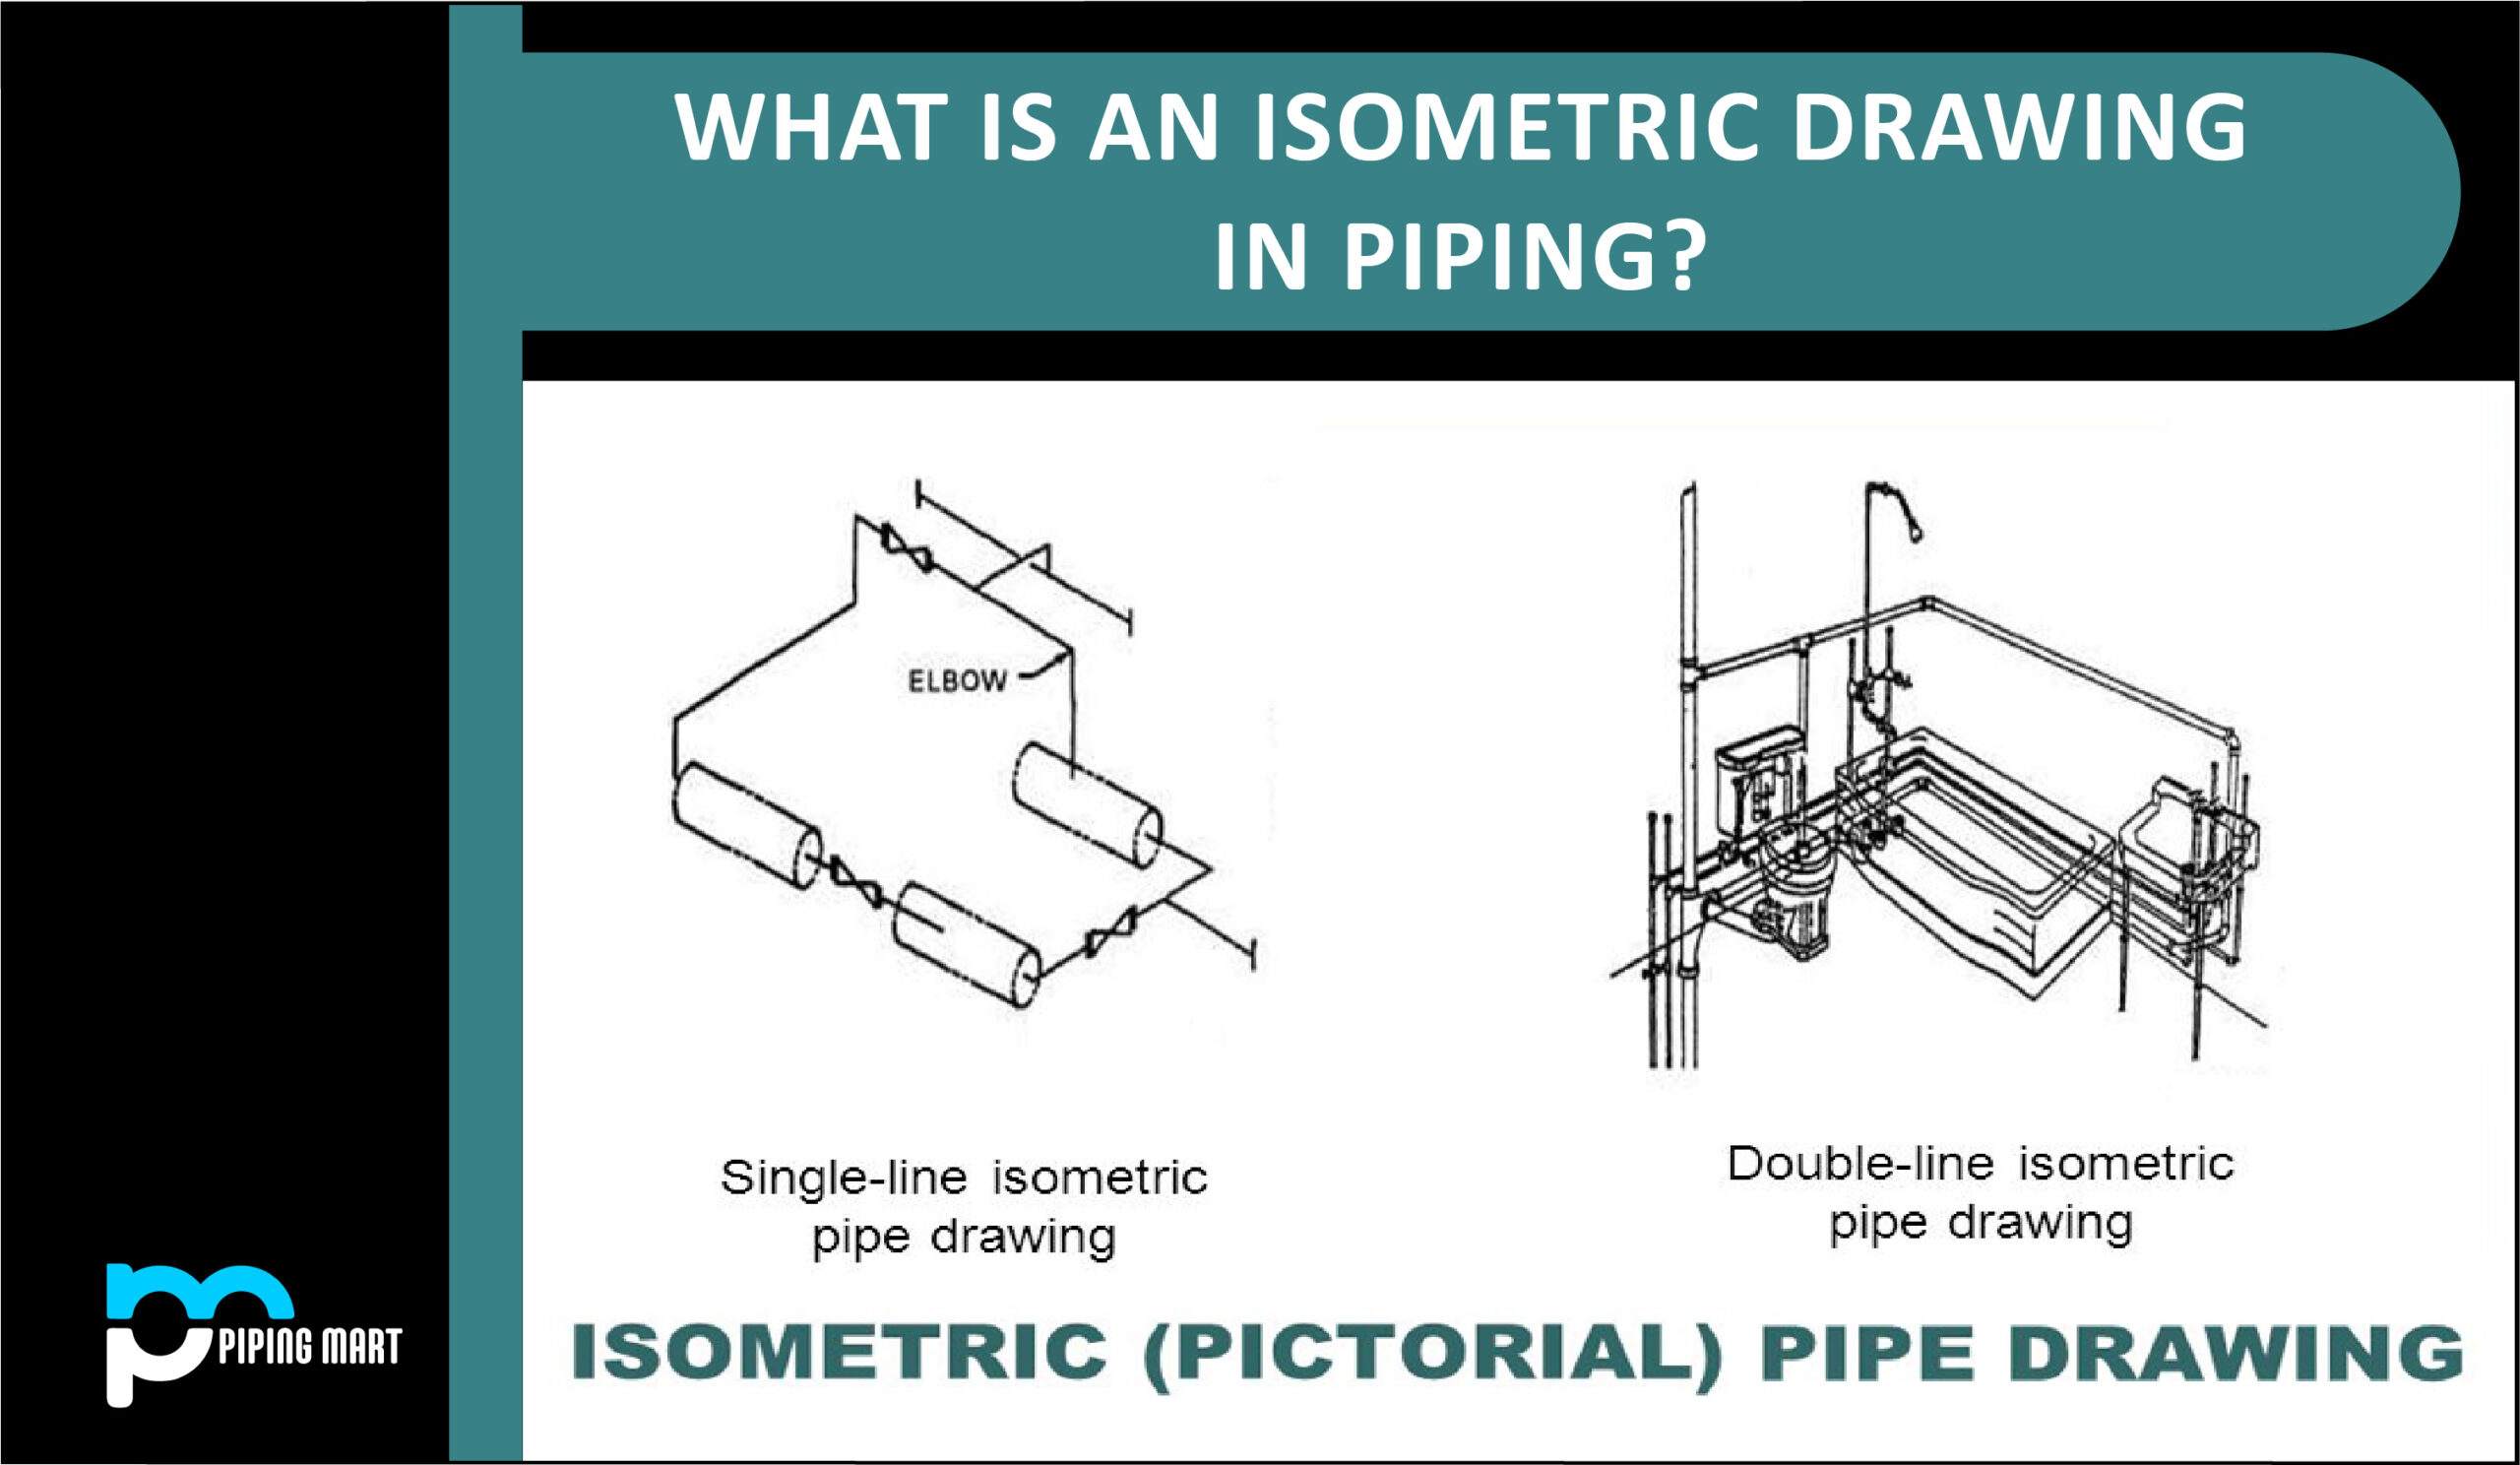 piping isometric drawings worksheet